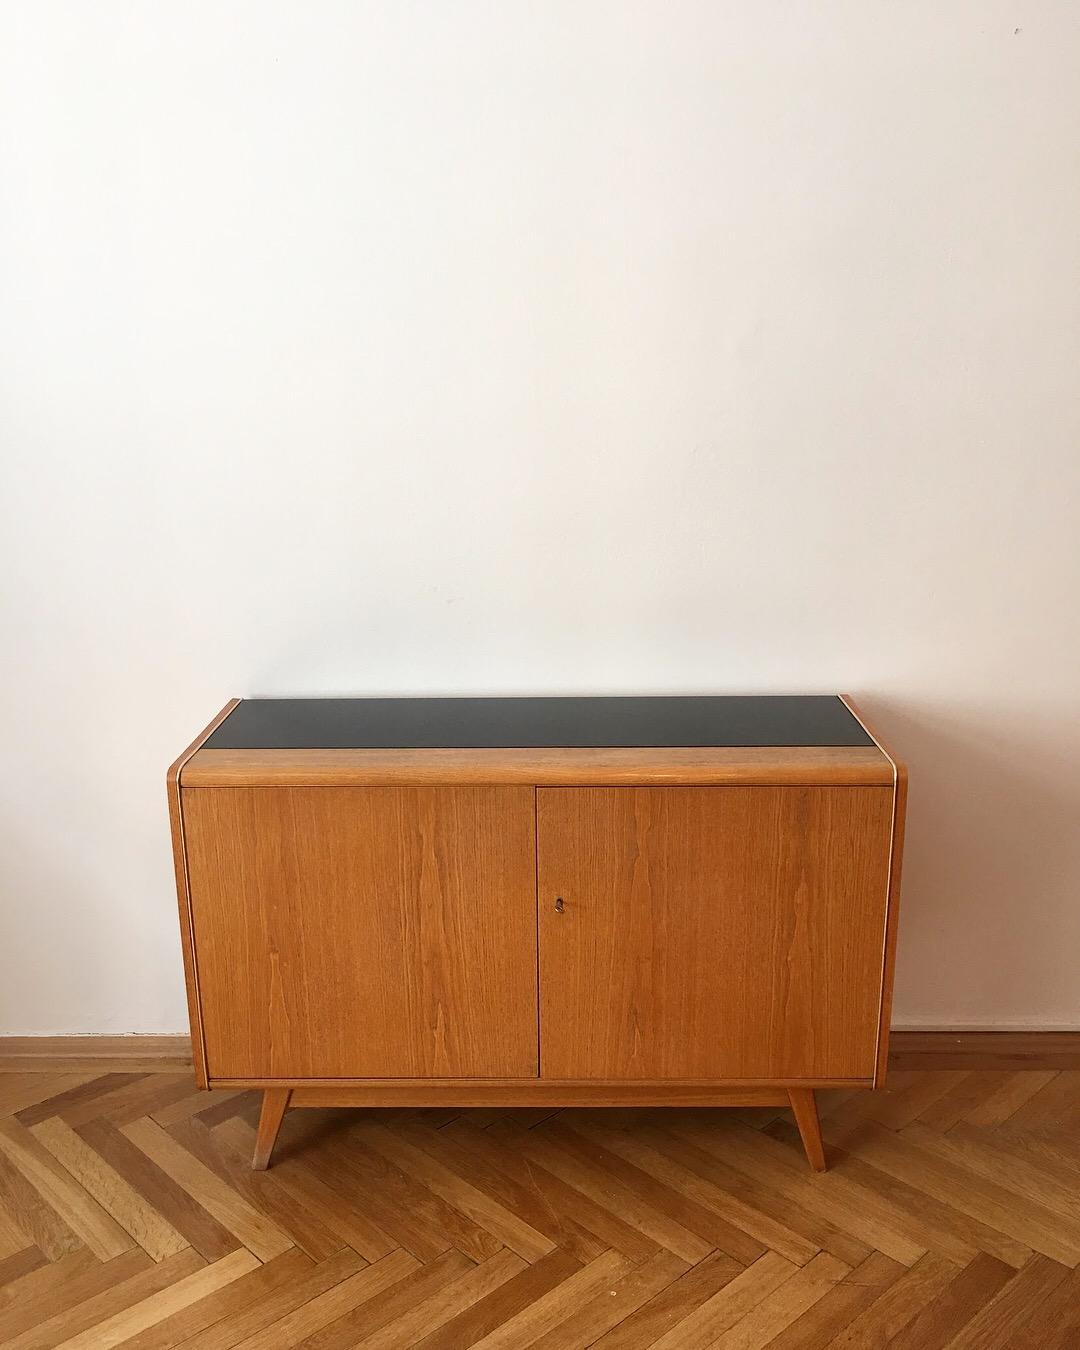 Czech Minimal Wooden Sideboard from Jitona, 1960s For Sale